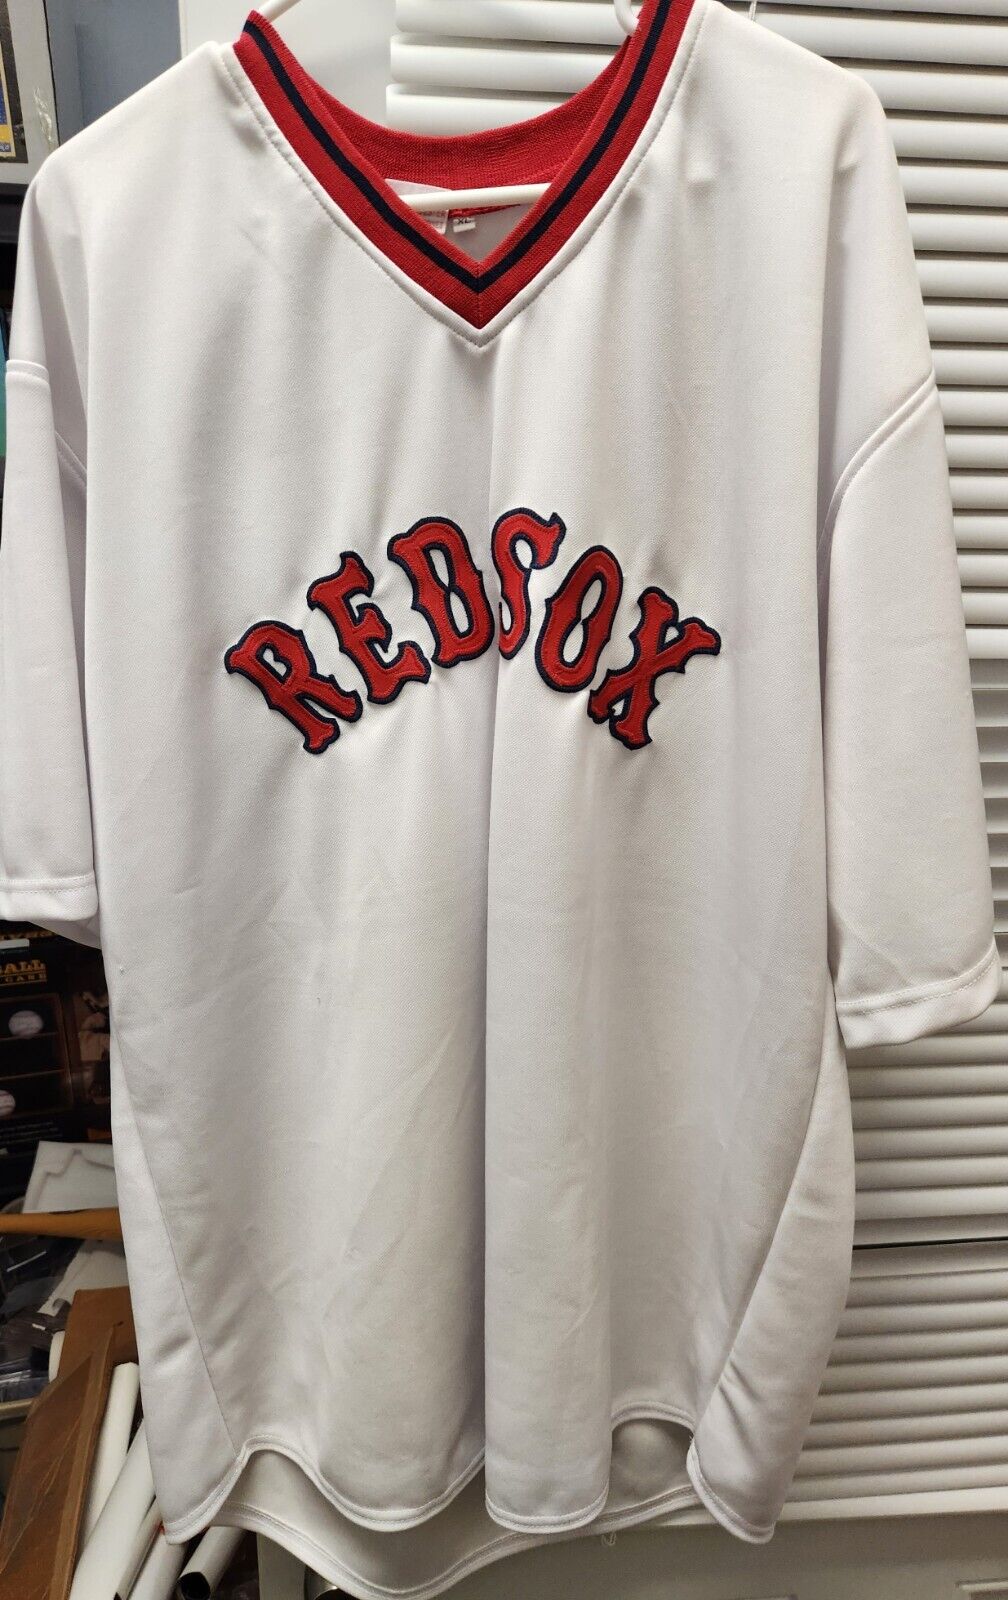 Luis Tiant Signed Replica Boston Red Sox Home Jersey JSA COA